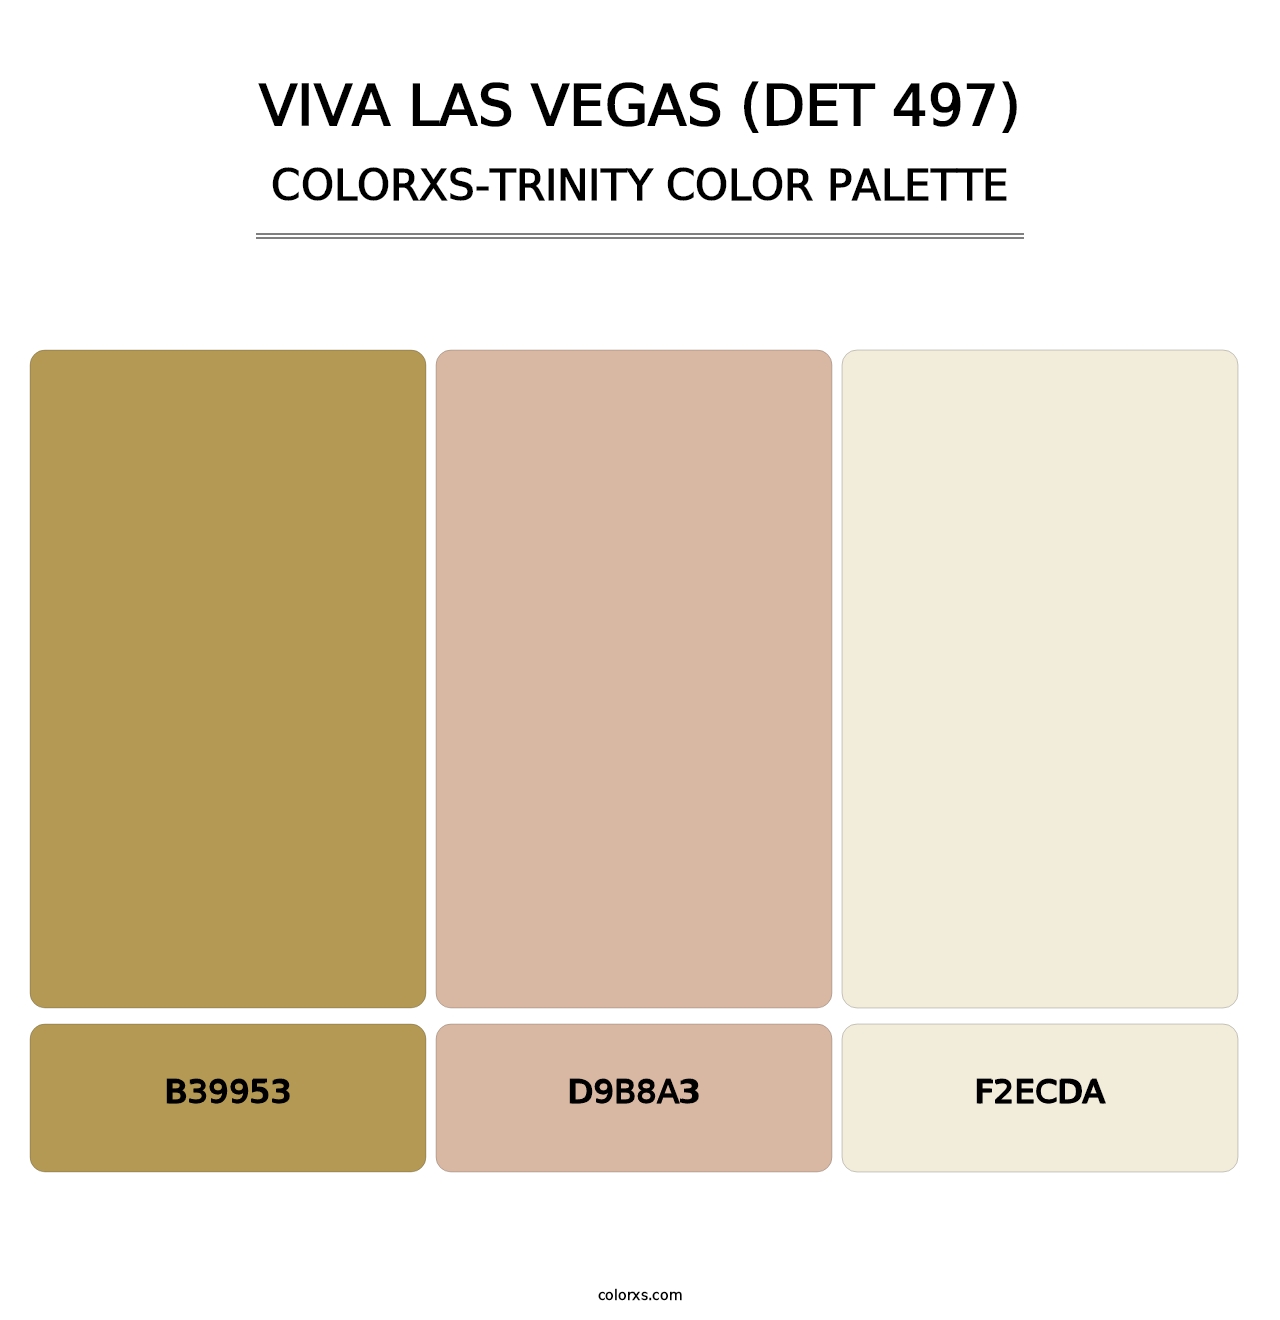 Viva Las Vegas (DET 497) - Colorxs Trinity Palette